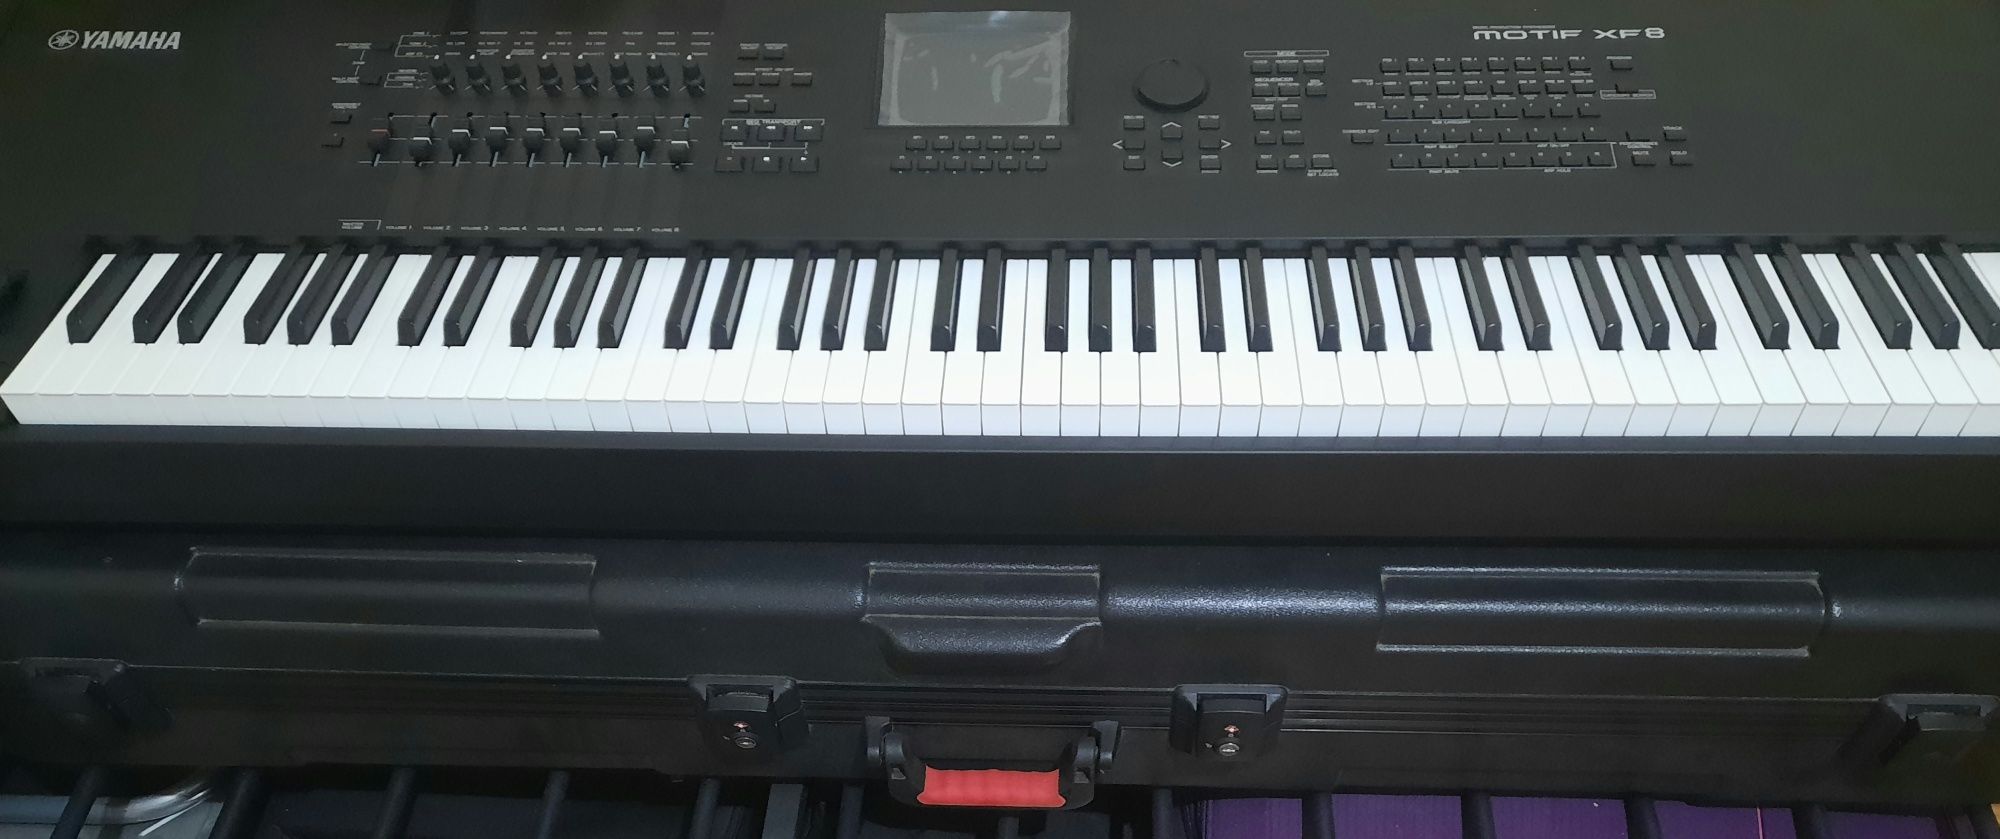 Yamaha Motif xf8 synth with Gator Flight case